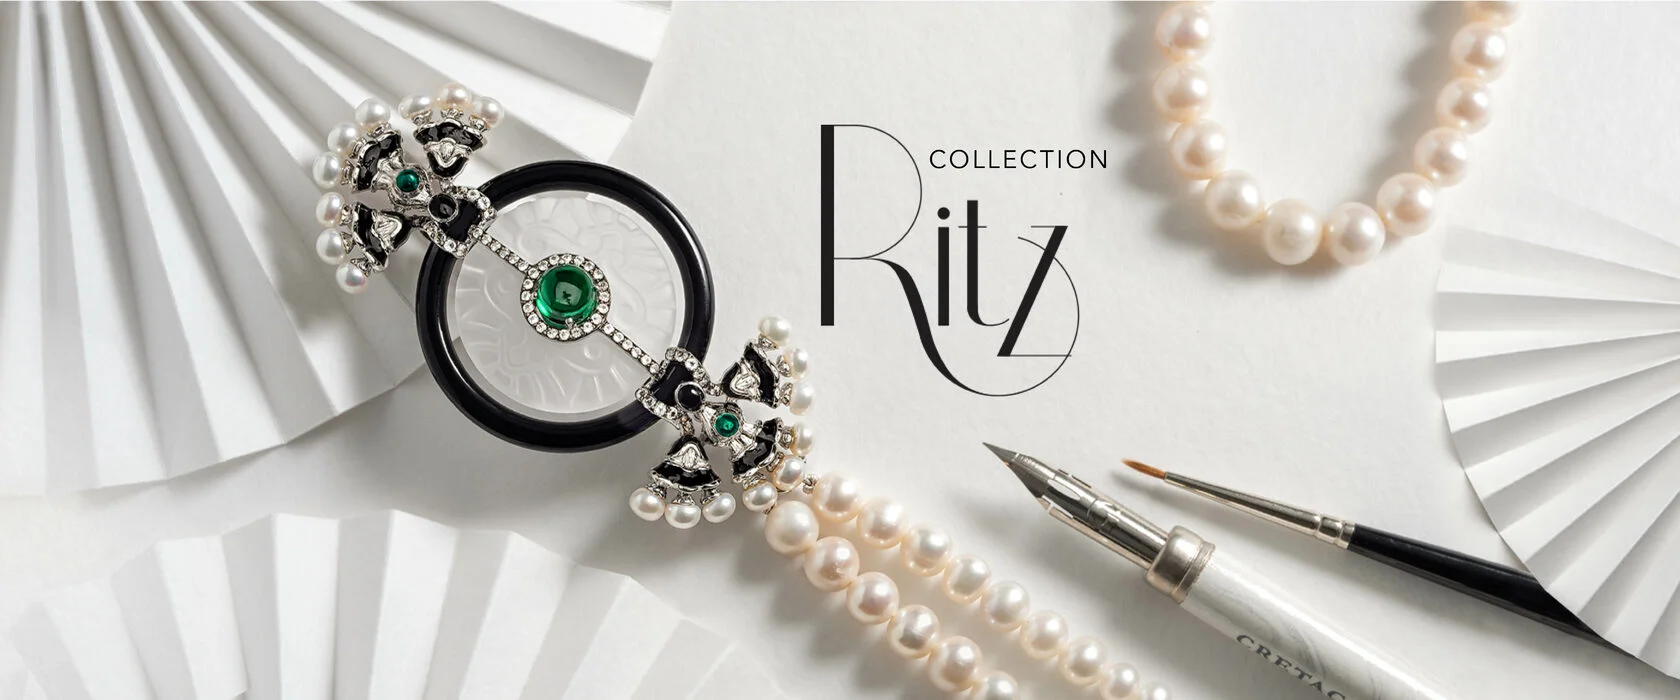 Ritz collection